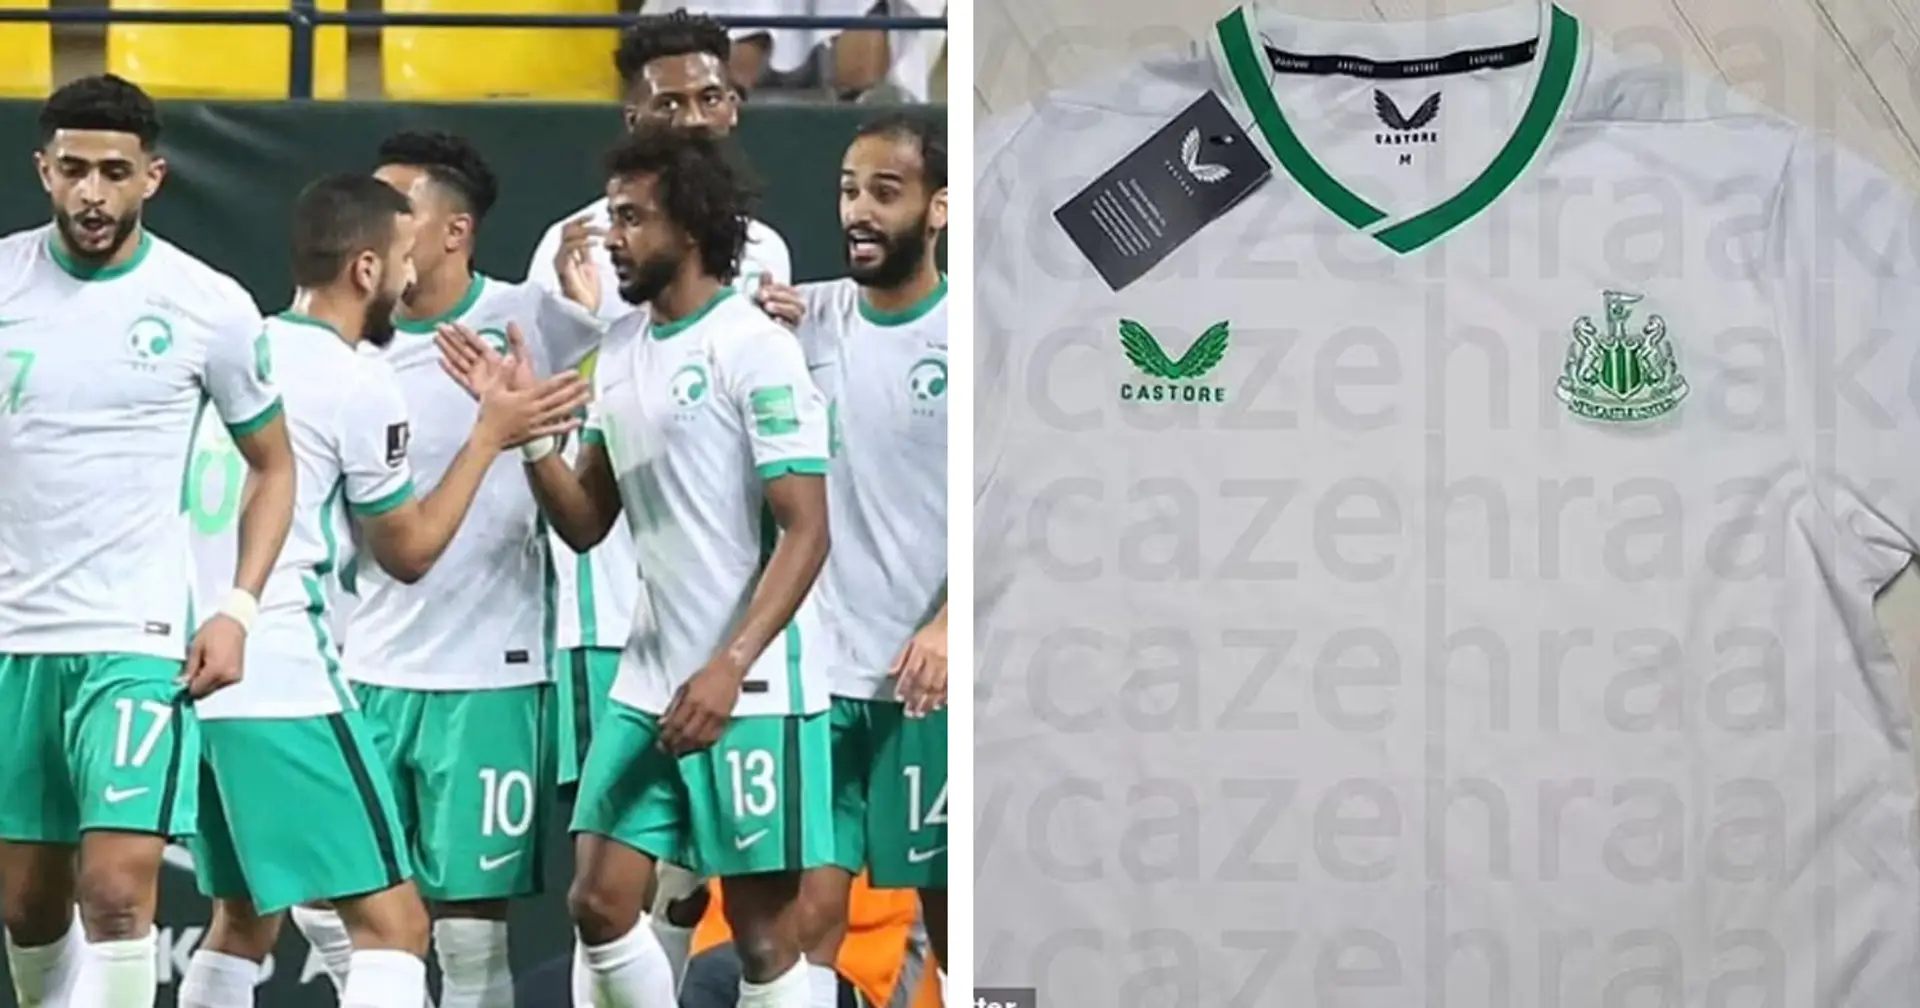 Newcastle United to wear 'Saudi Arabia inspired’ green and white away kit for next season